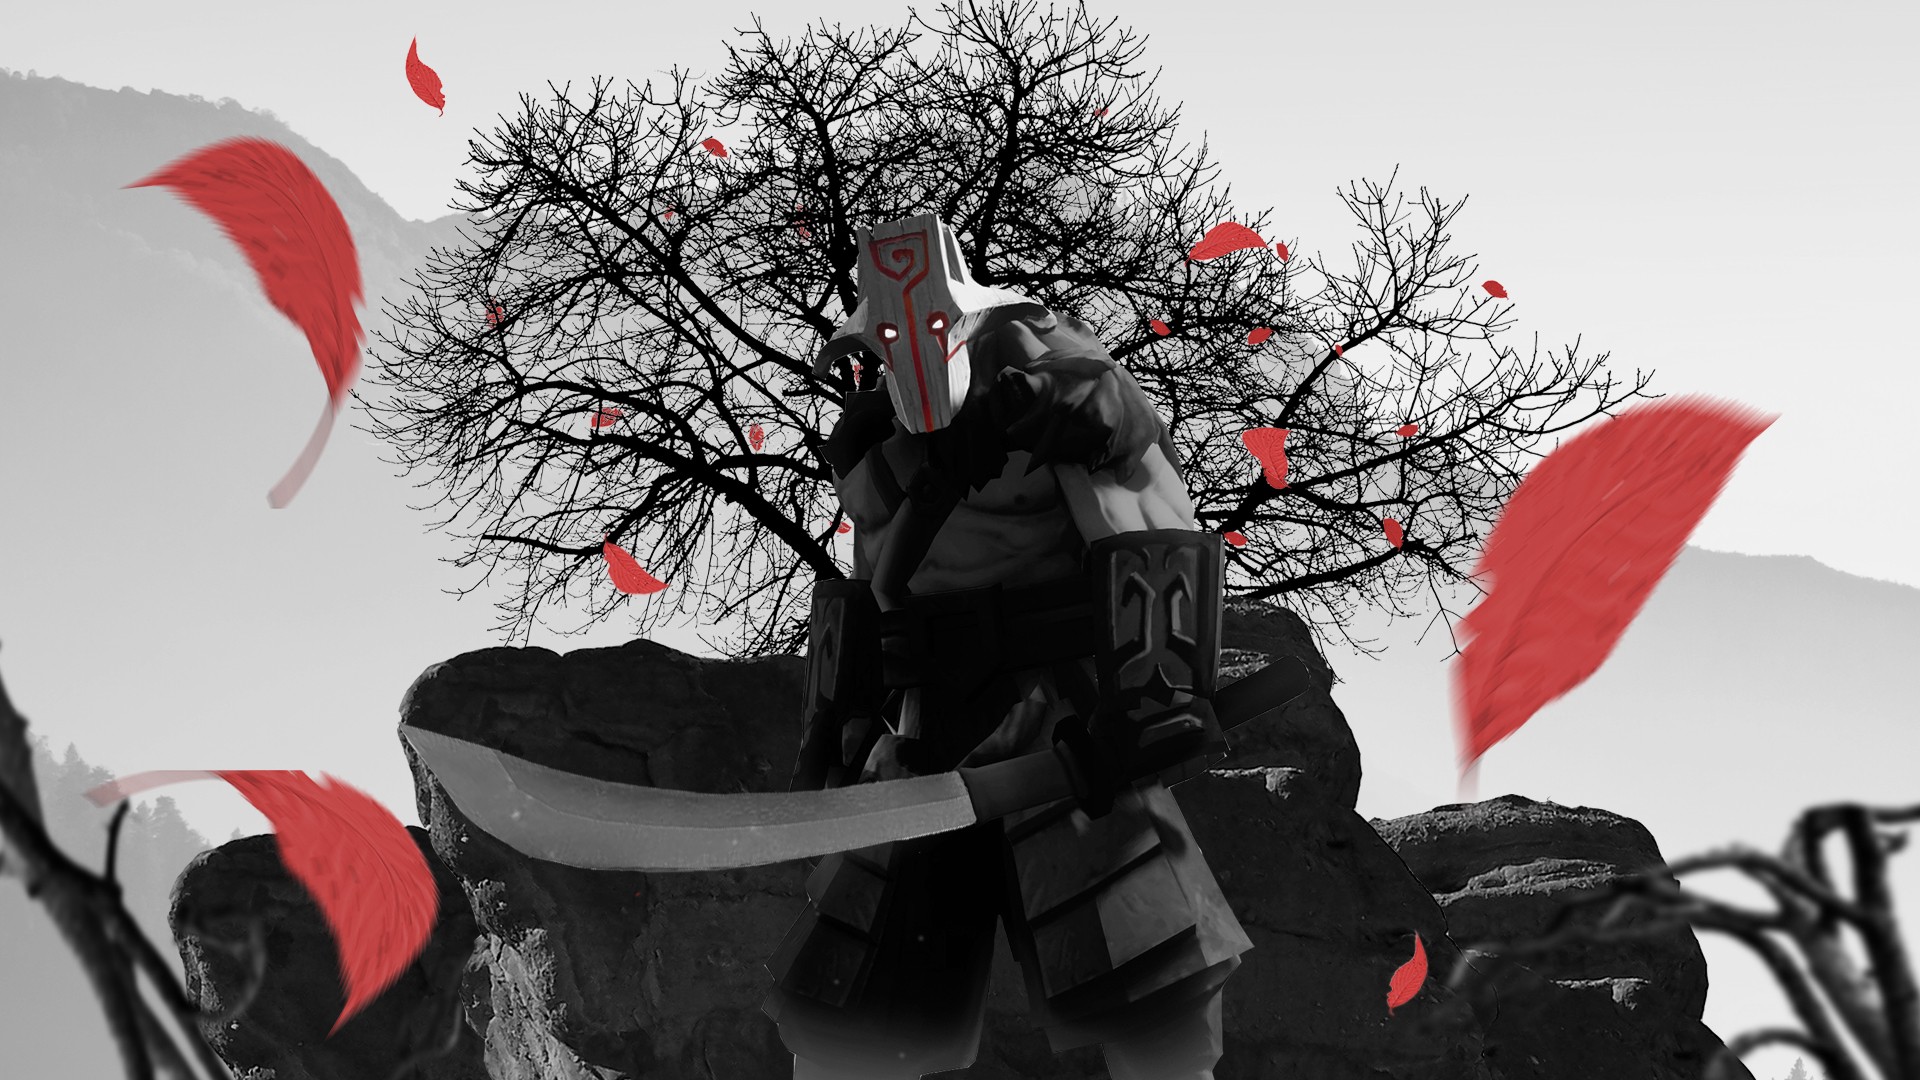 General 1920x1080 Dota 2 Dota Steam (software) Juggernaut mask warrior samurai video games